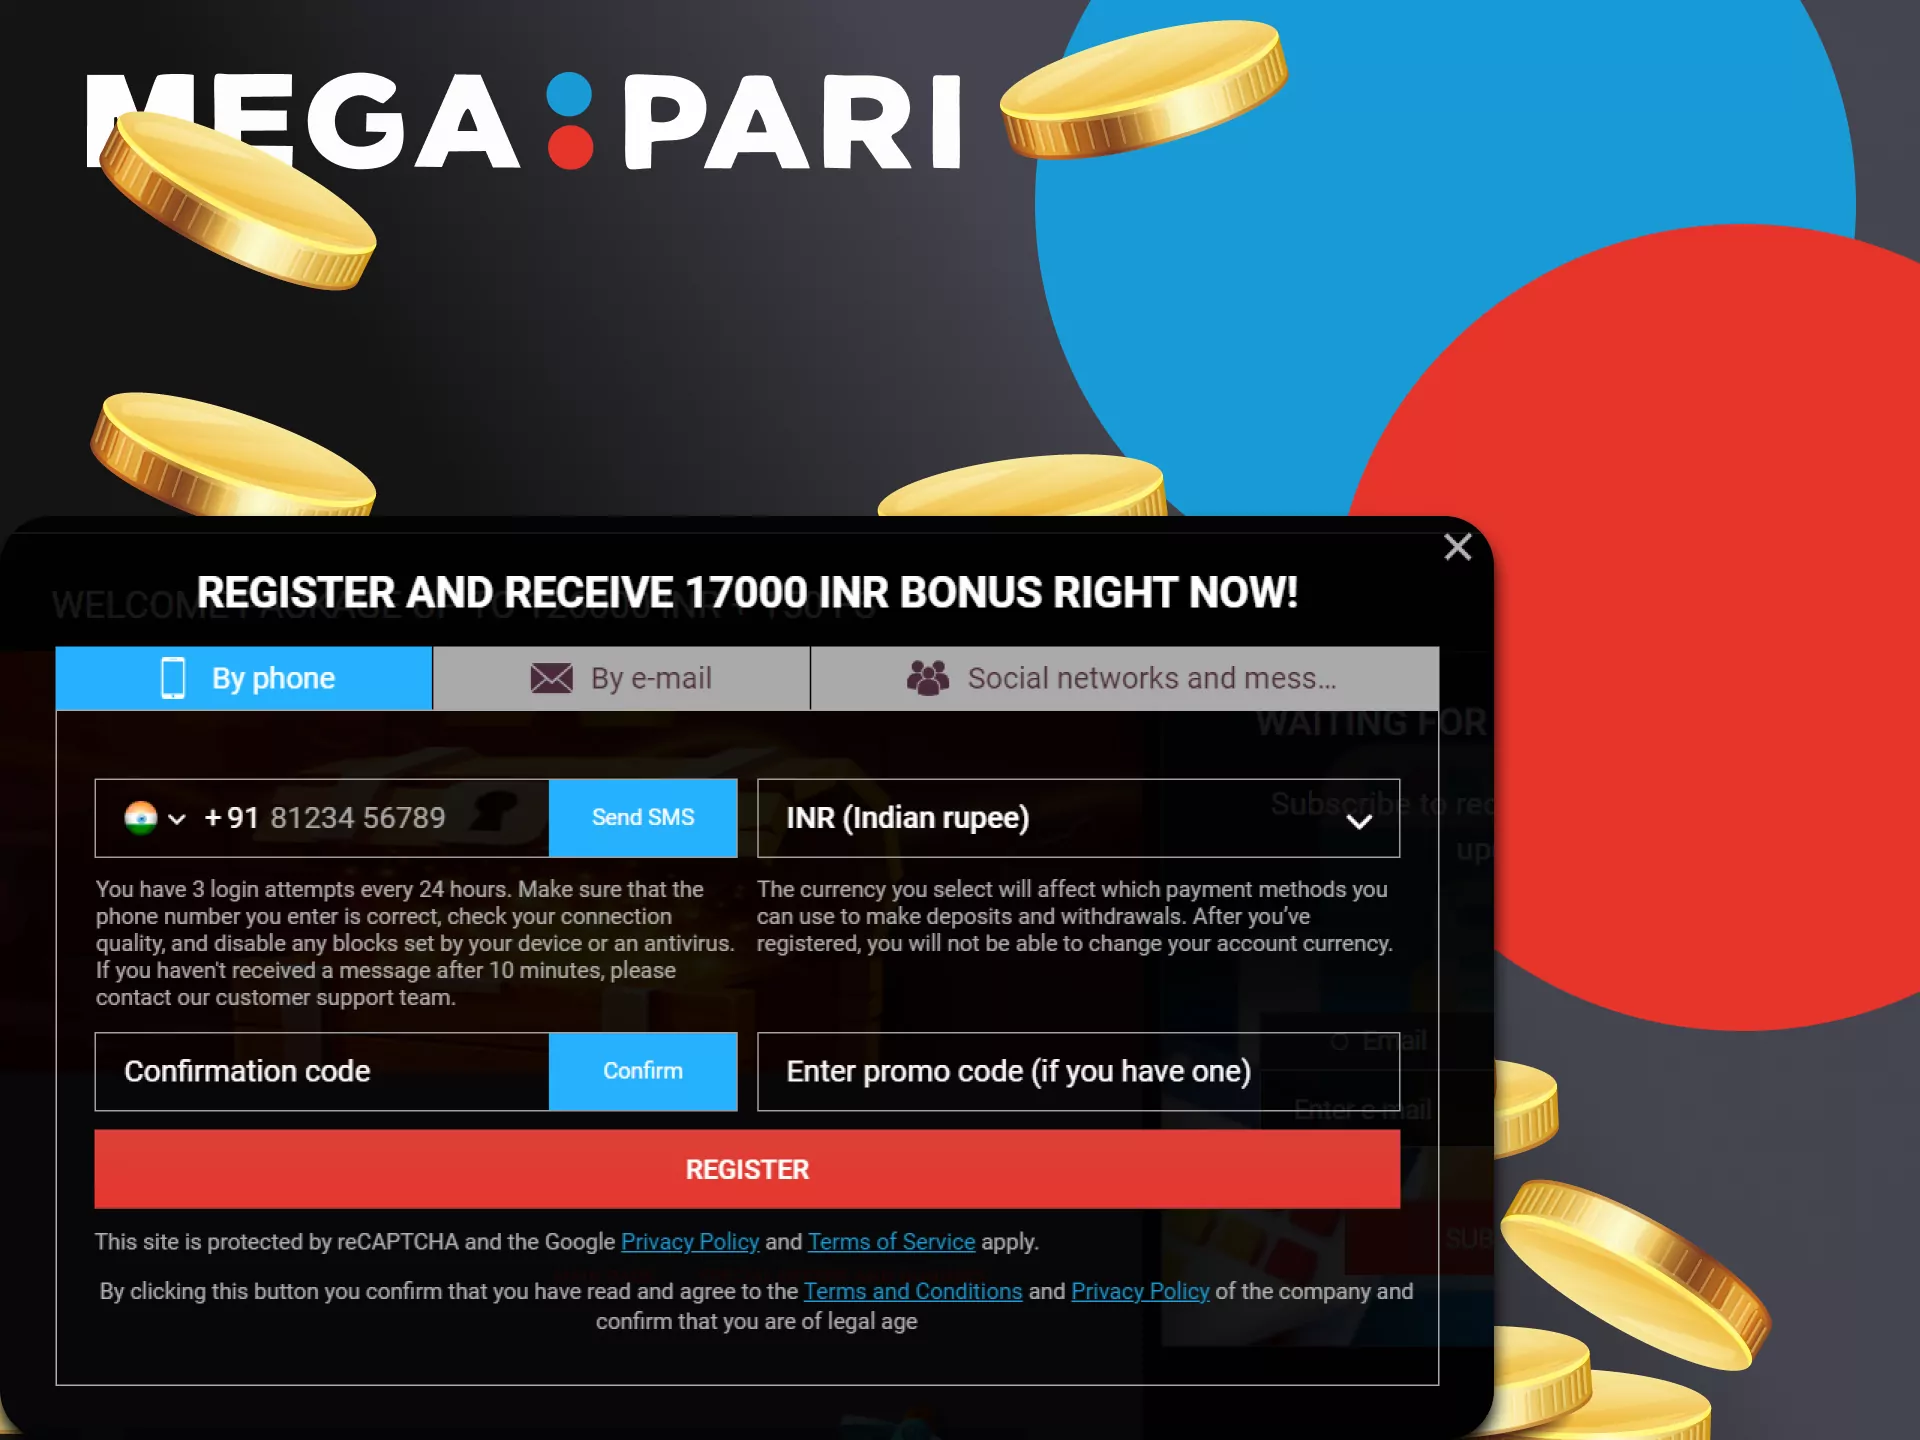 Create a Megapari account and make a minimum deposit to receive bonuses.